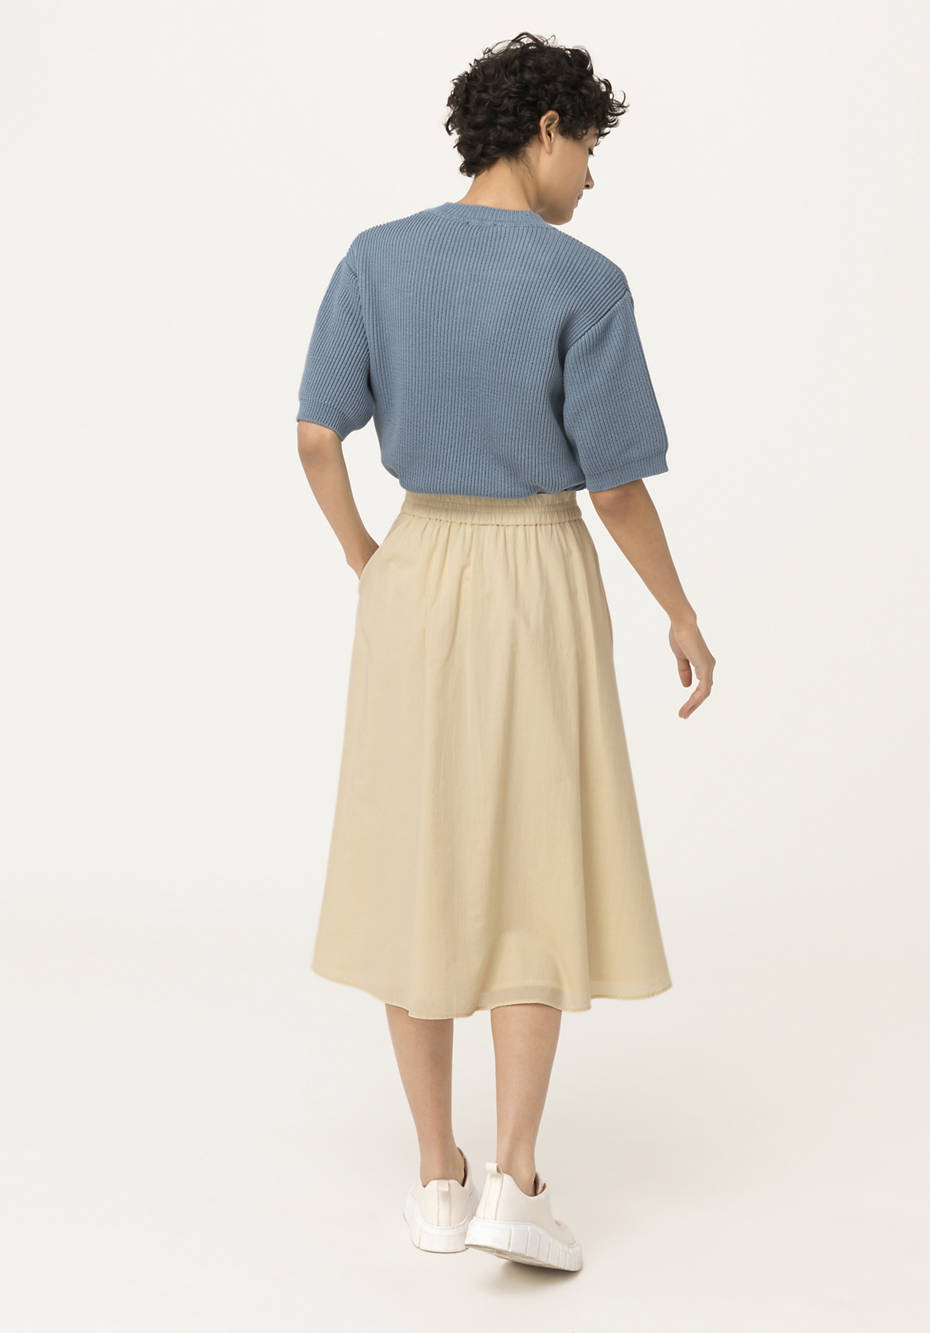 Organic cotton crepe skirt